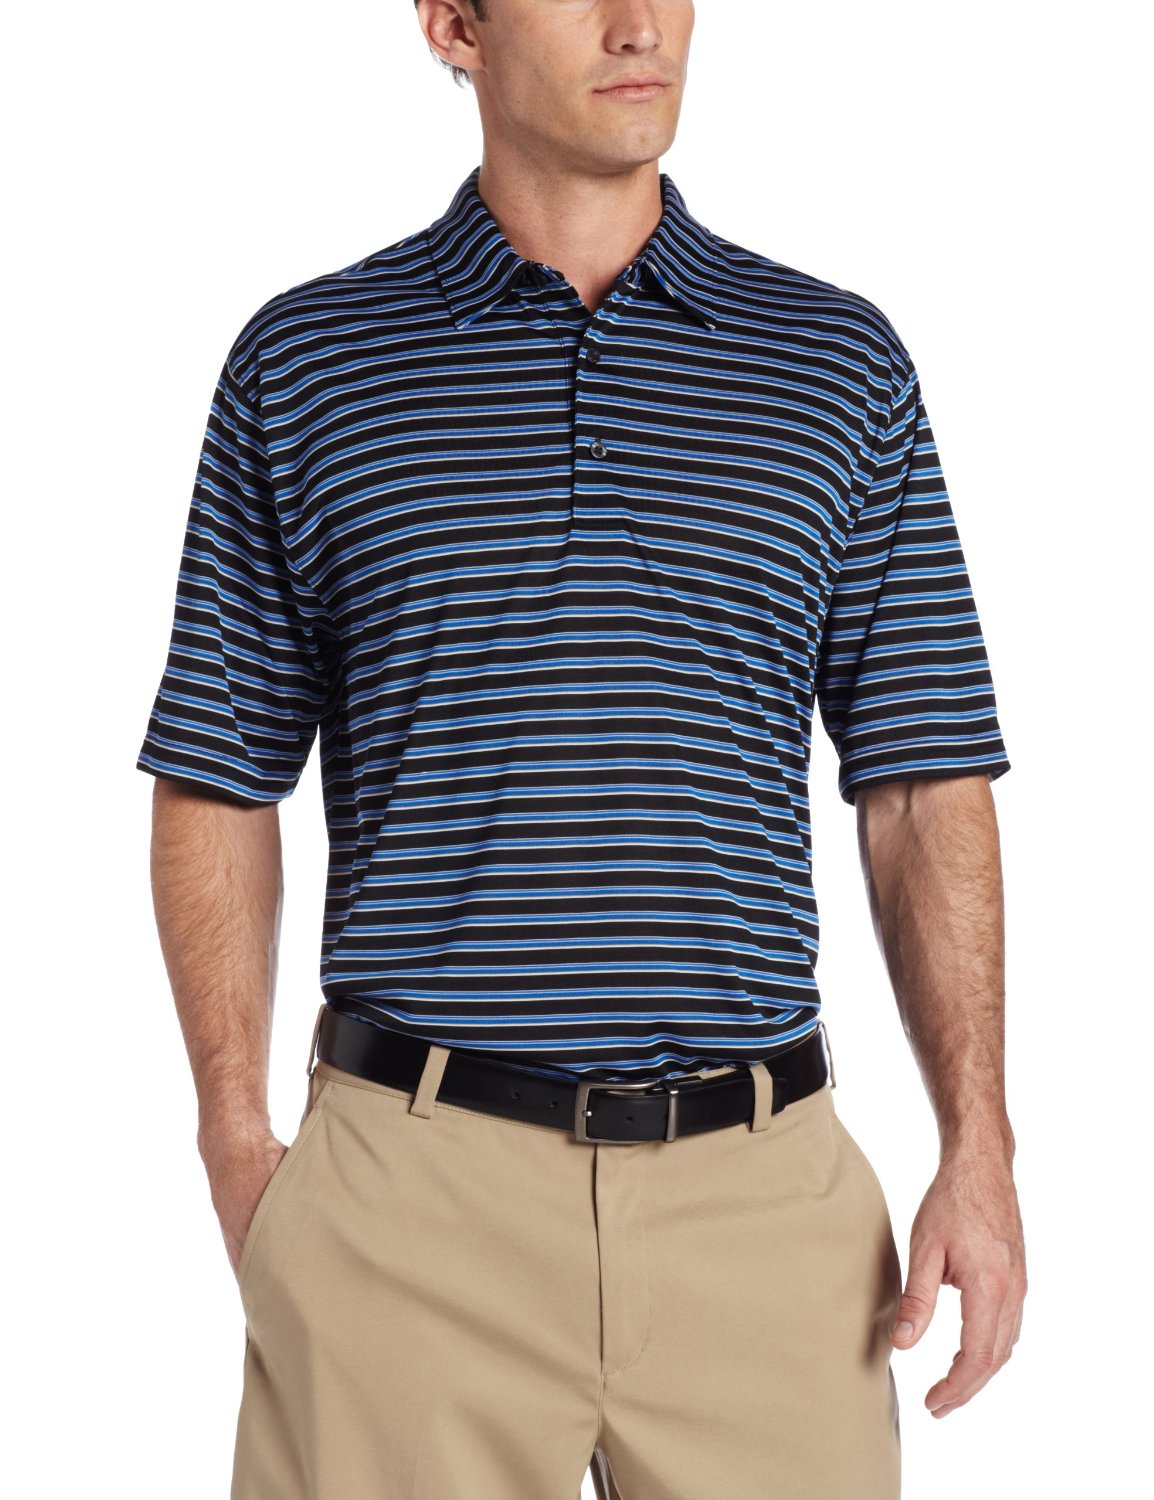 Greg Norman Mens Sorbtek Multi Stripe Golf Polo Shirts